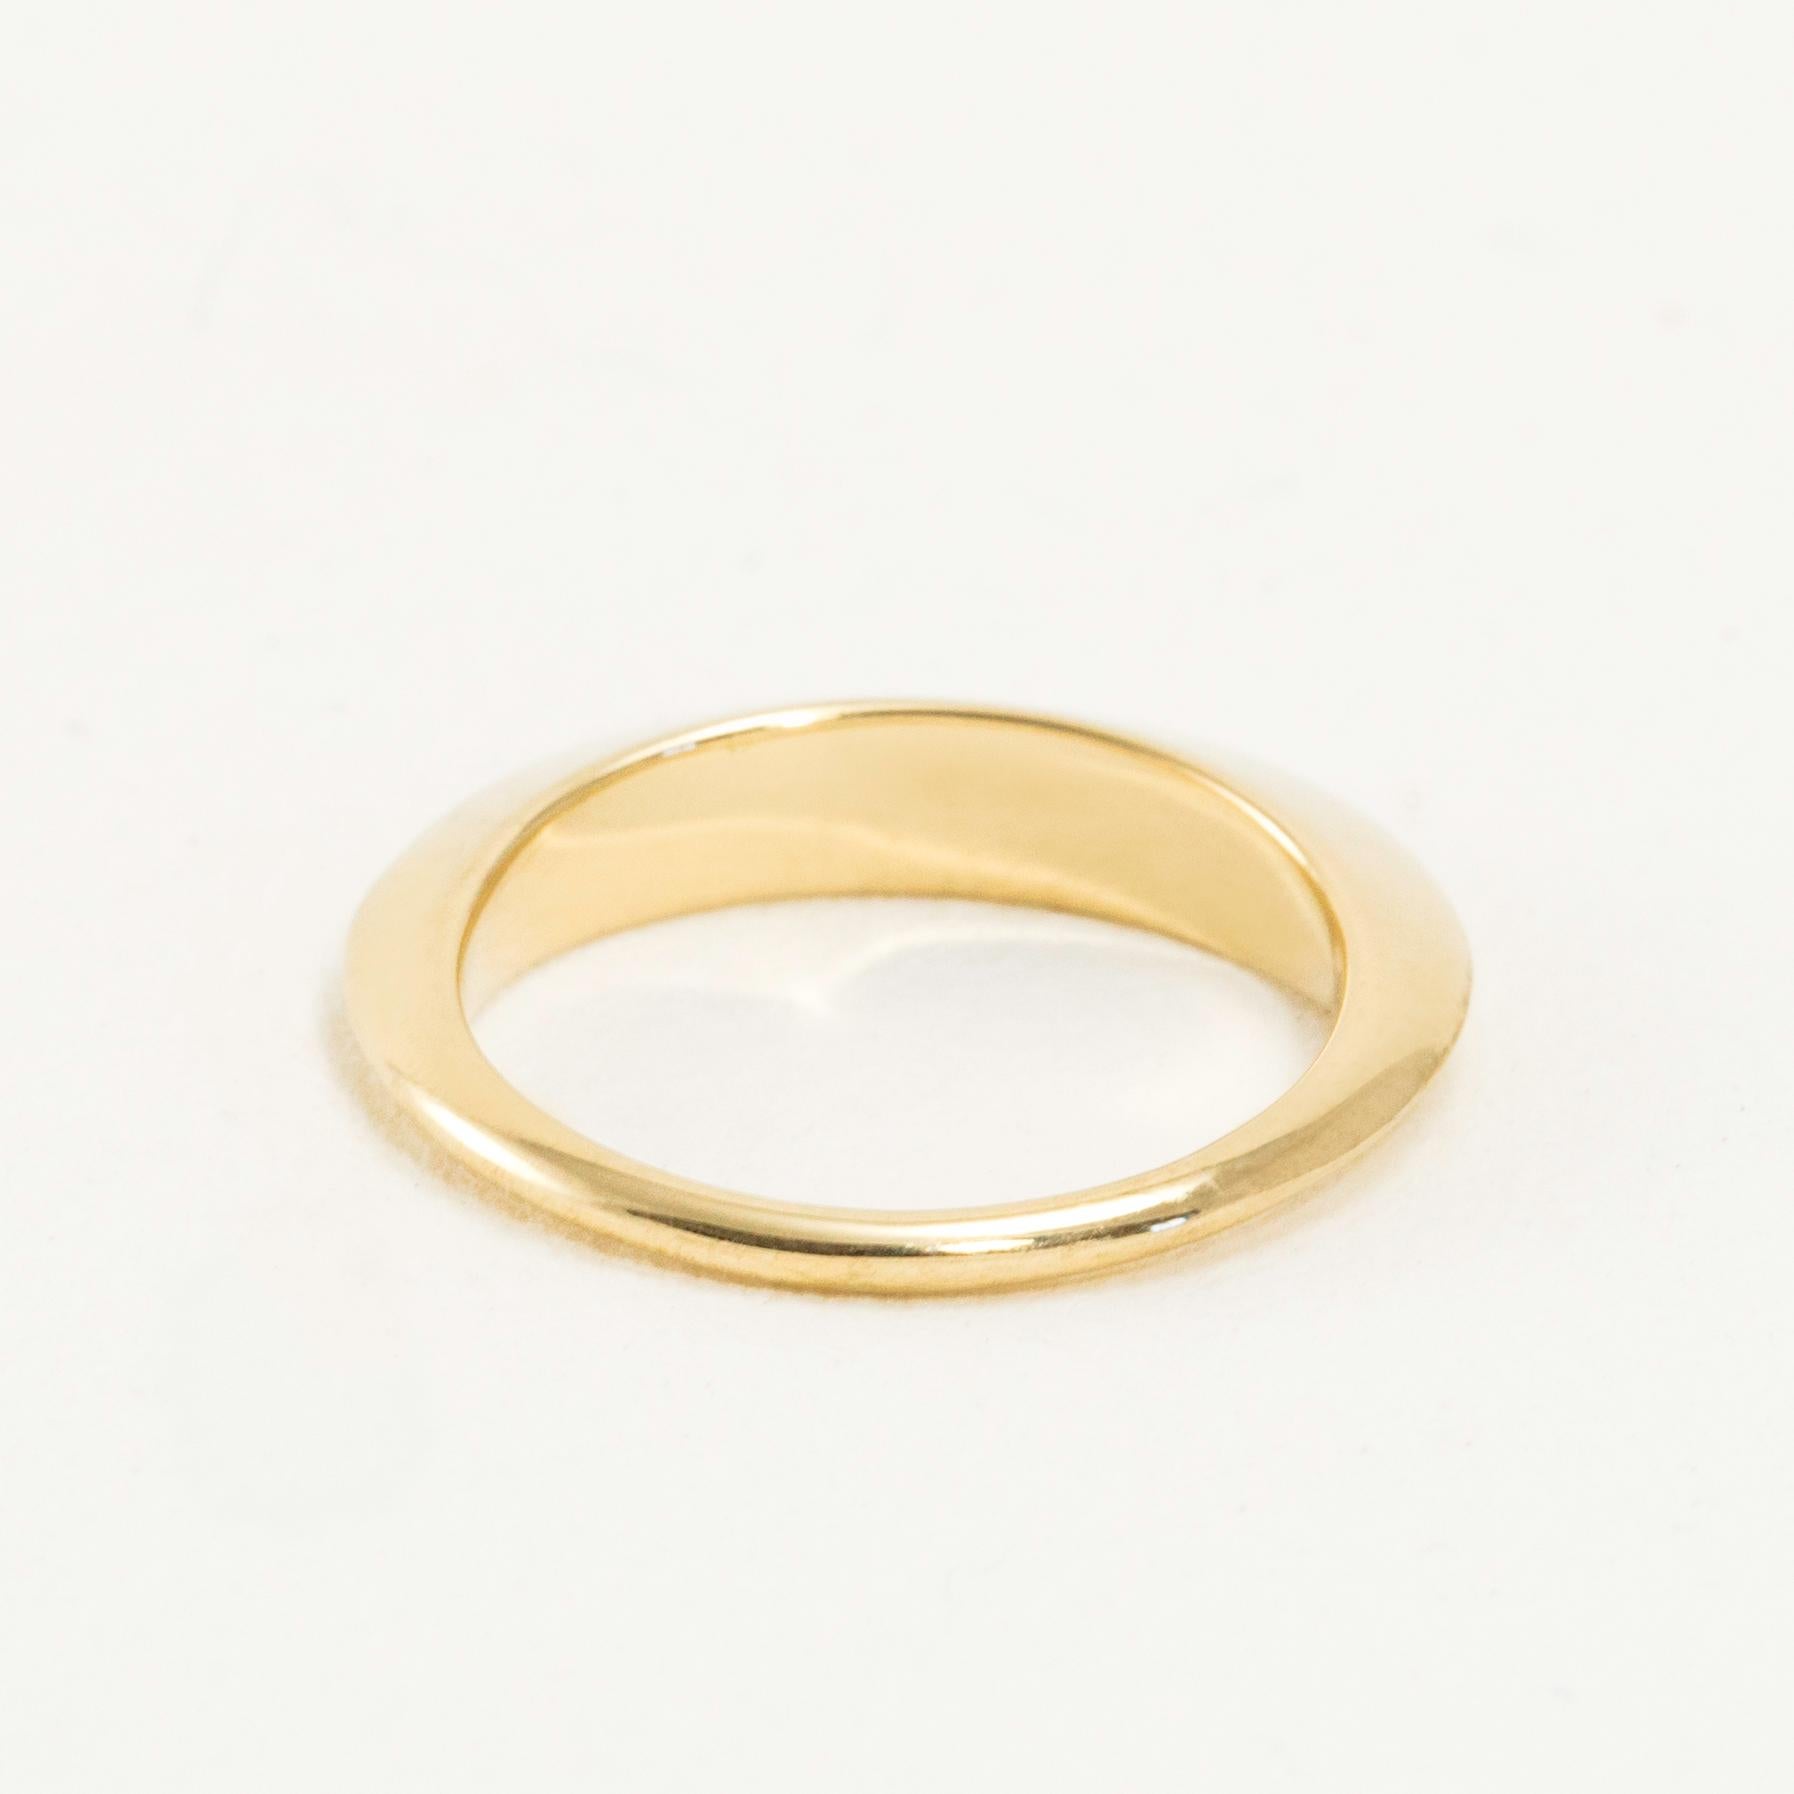 solid gold harley davidson ring